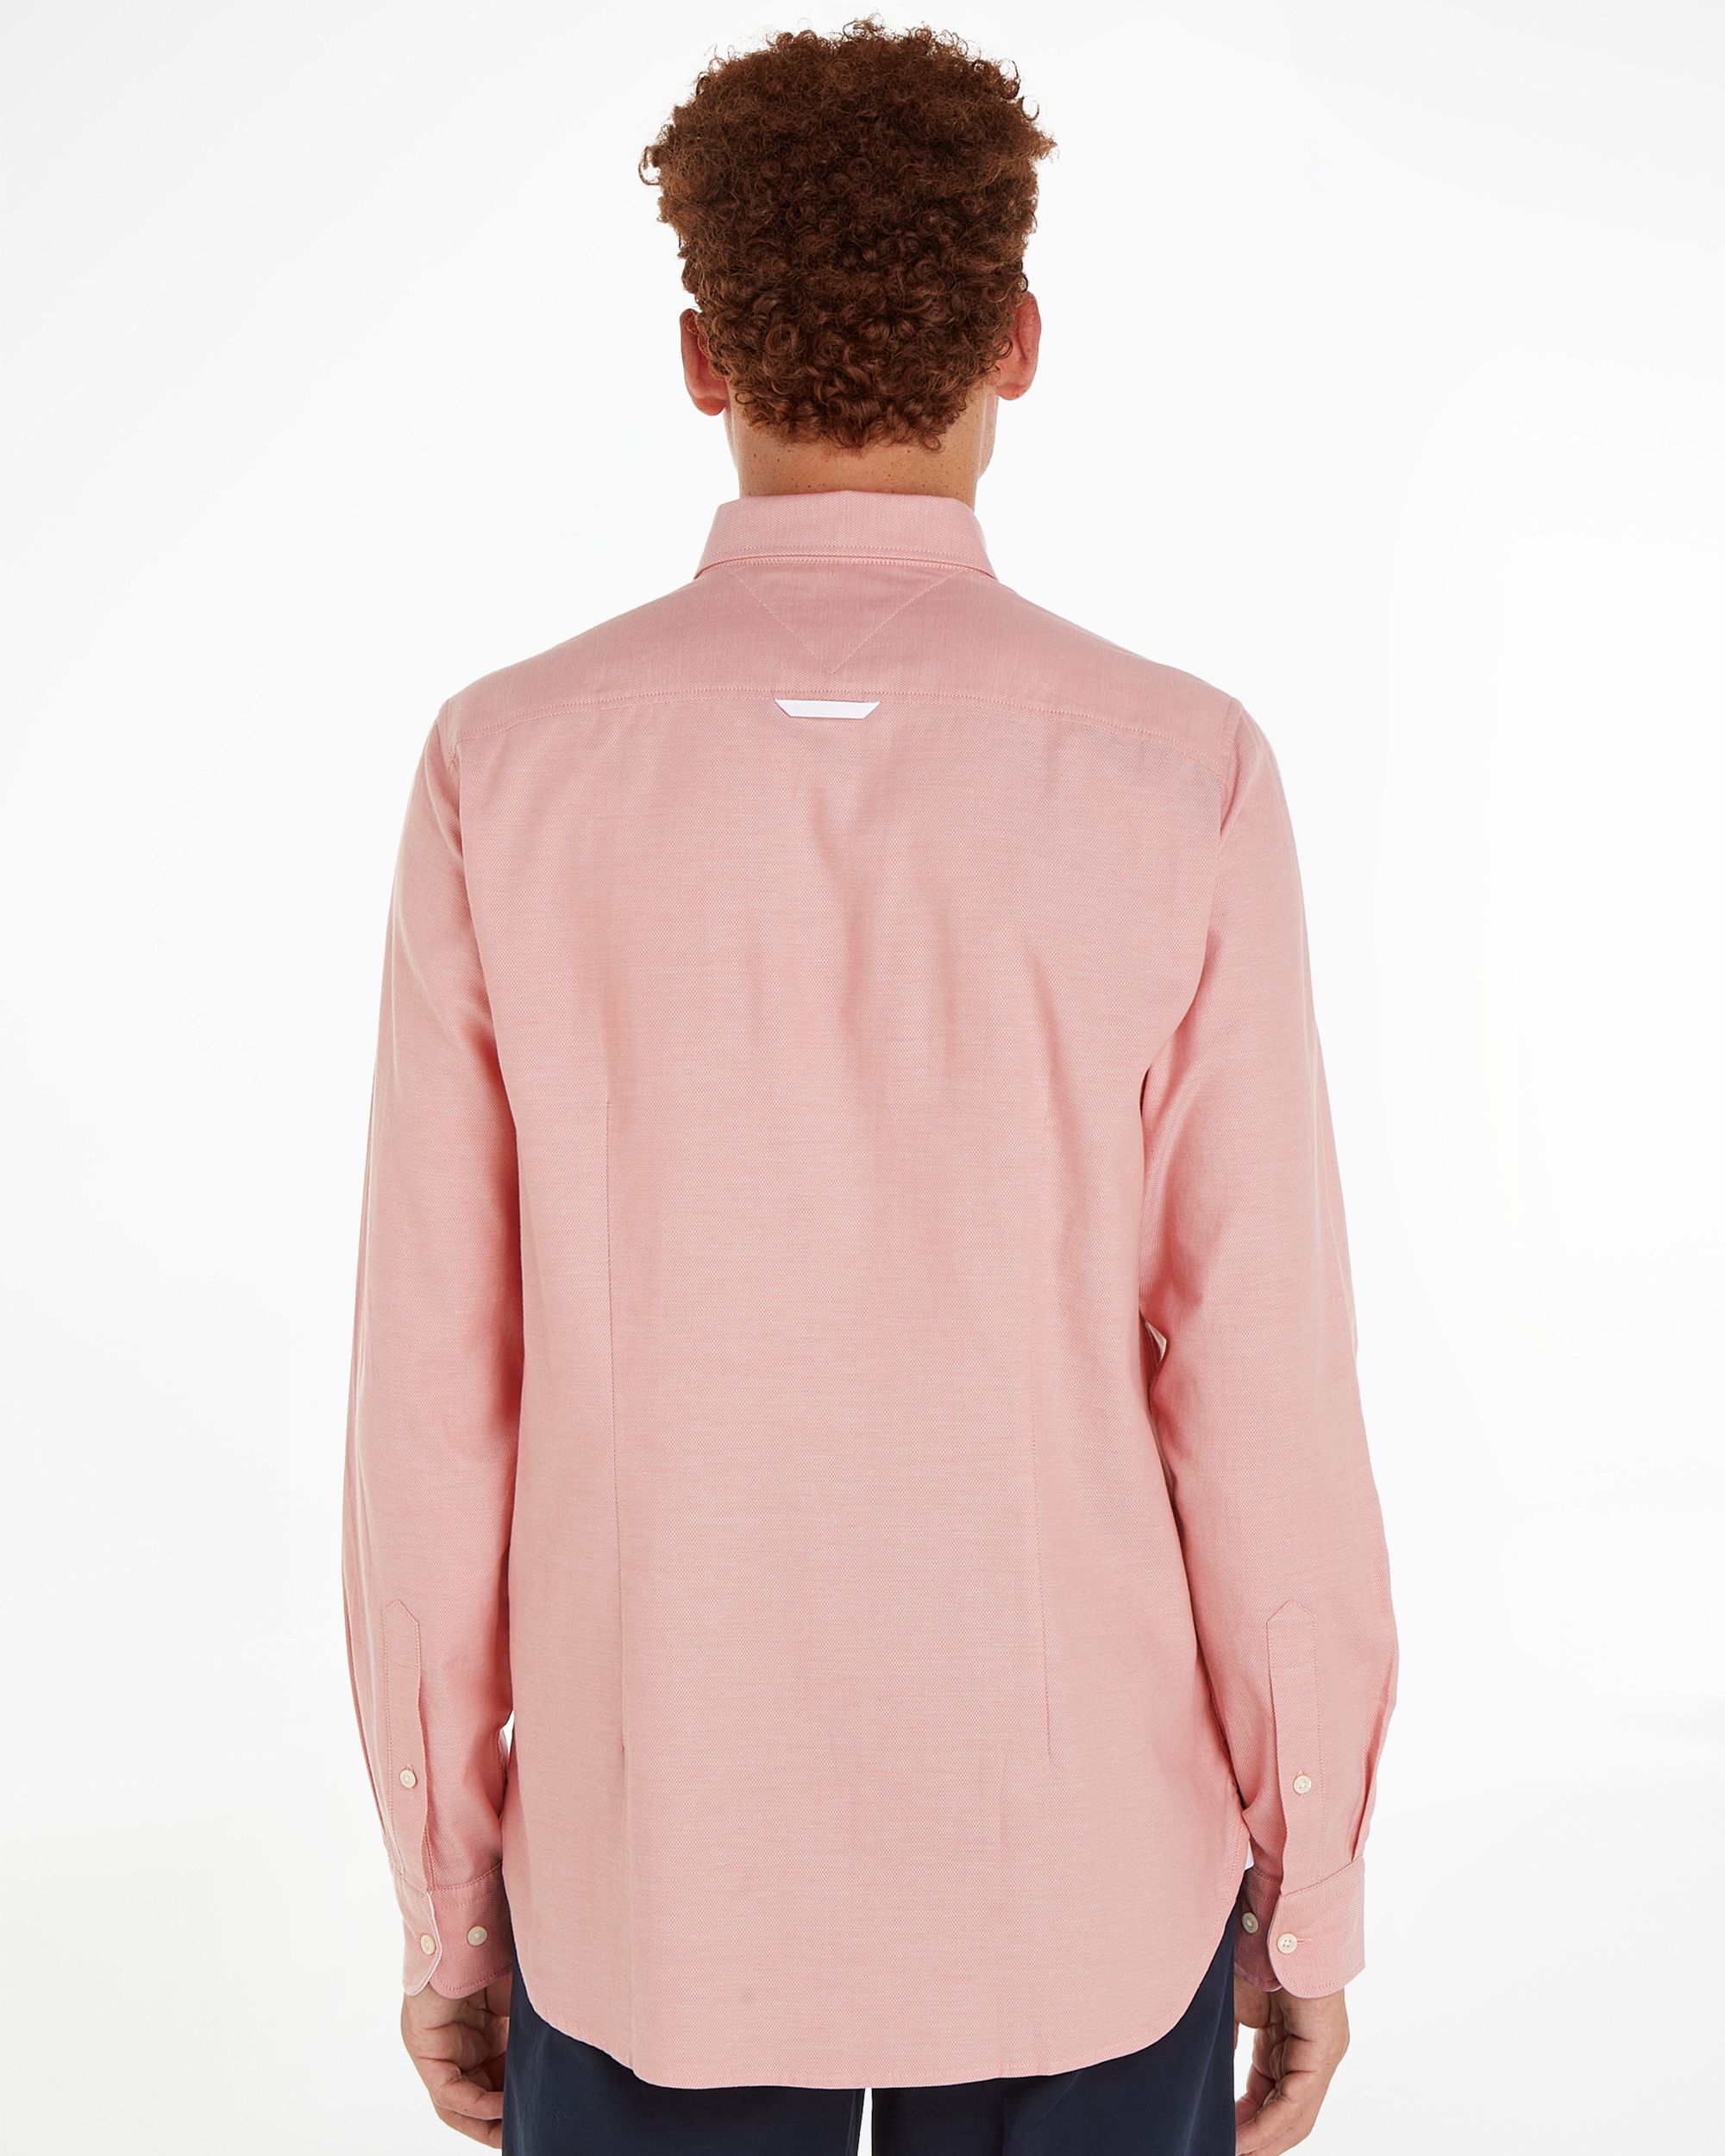 Tommy Hilfiger Menswear Casual Overhemd LM Roze 094626-001-L